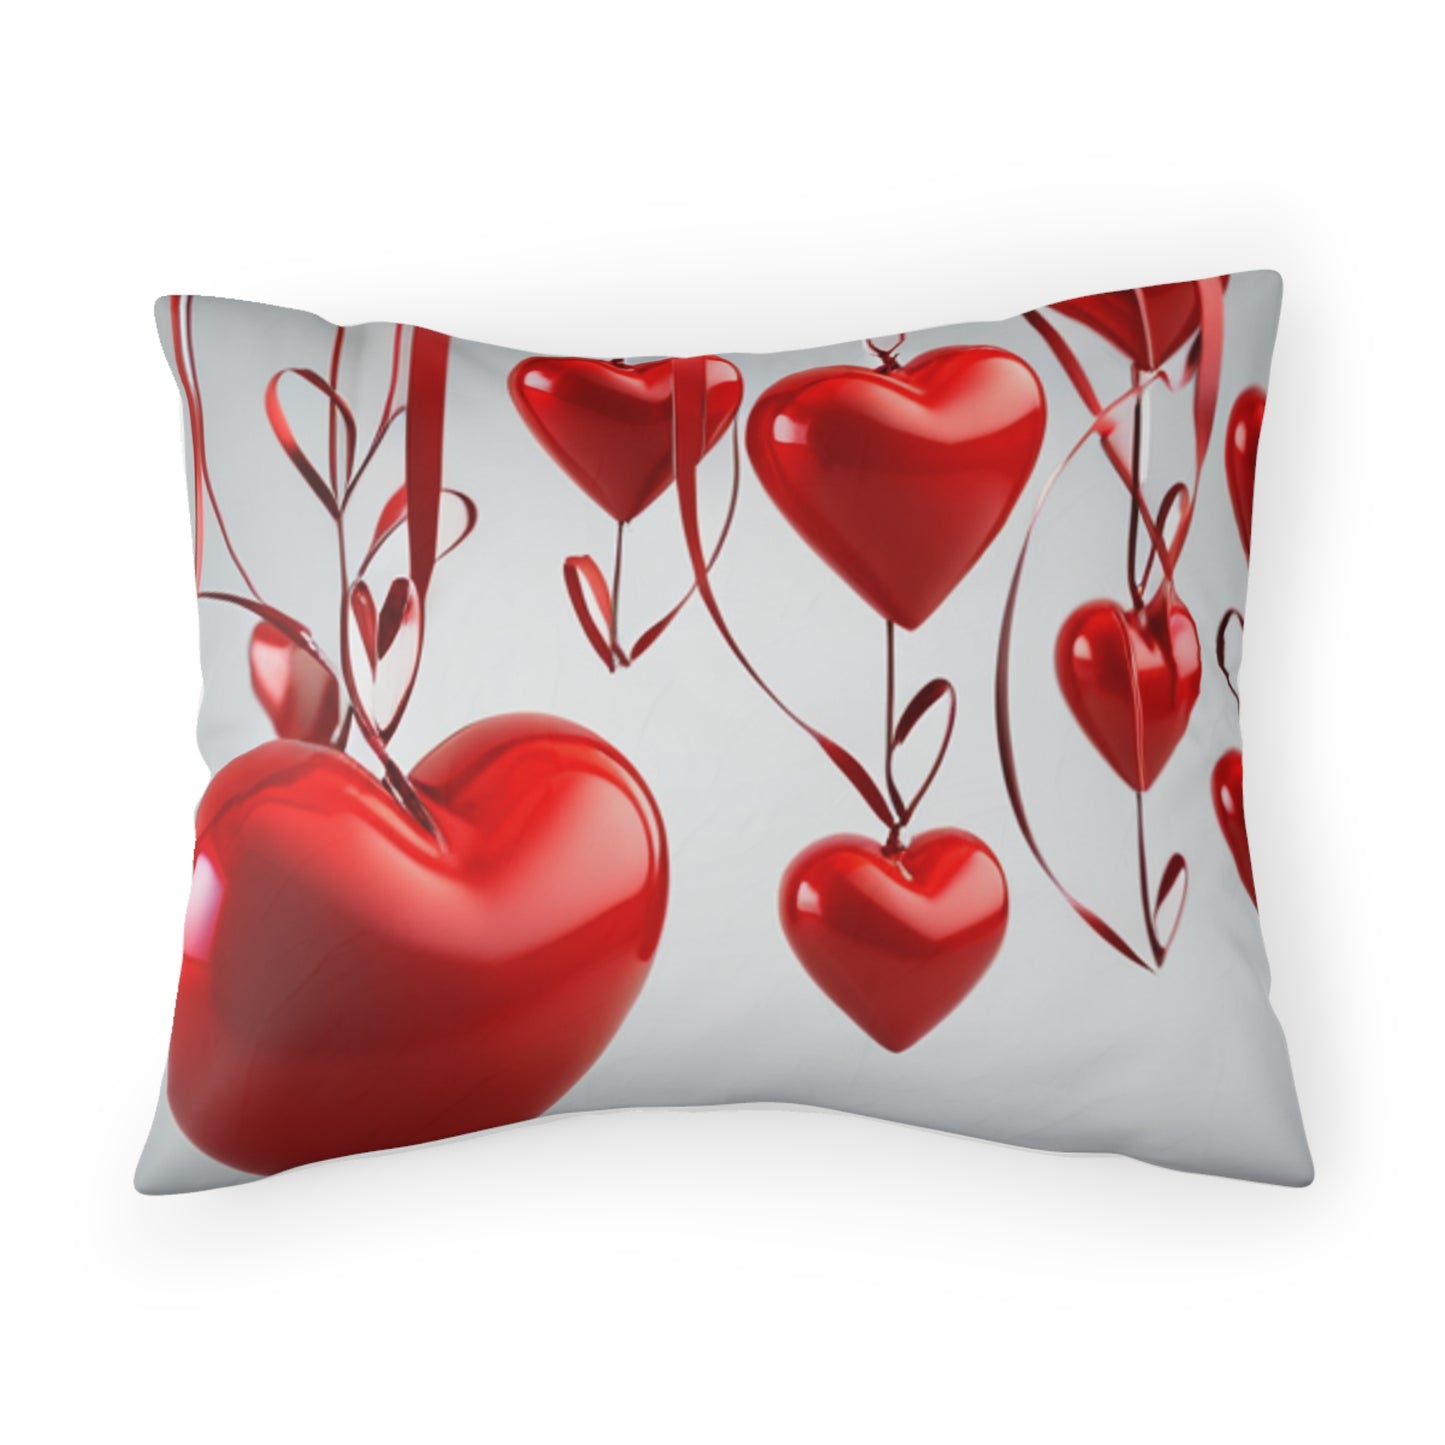 Pillow Sham: Be my Valentine